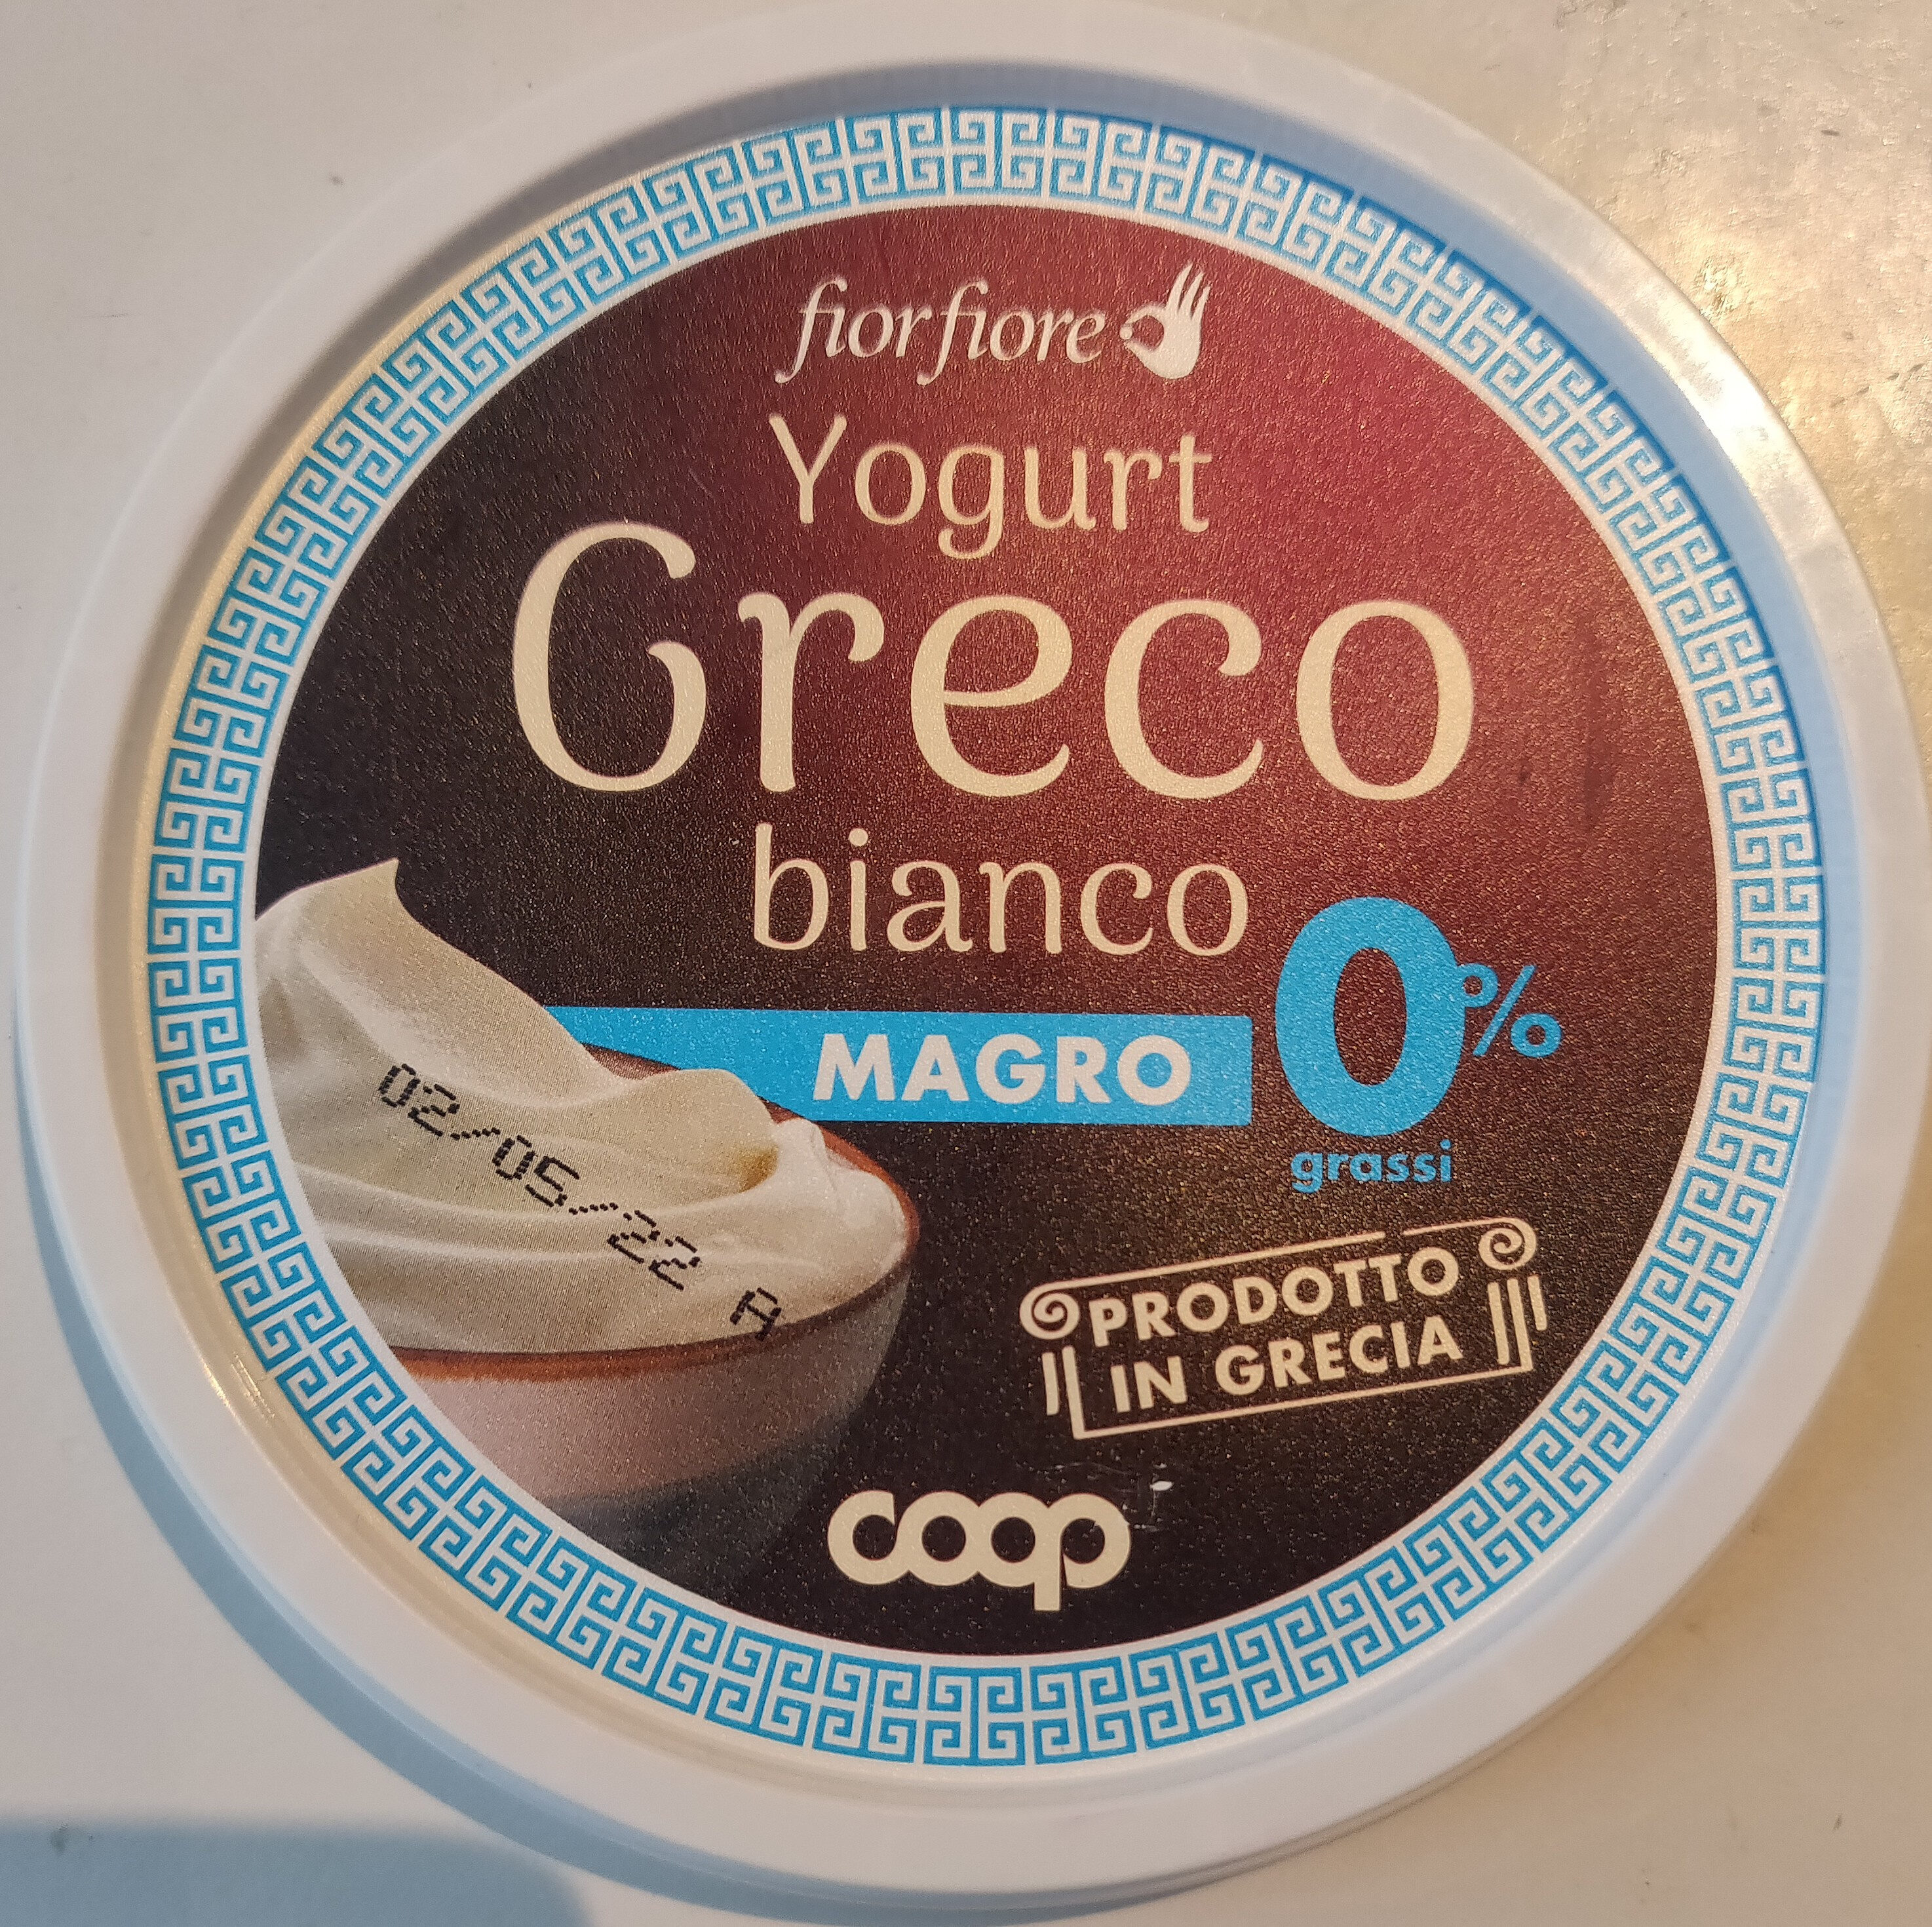 Yogurt greco bianco magro - Product - it